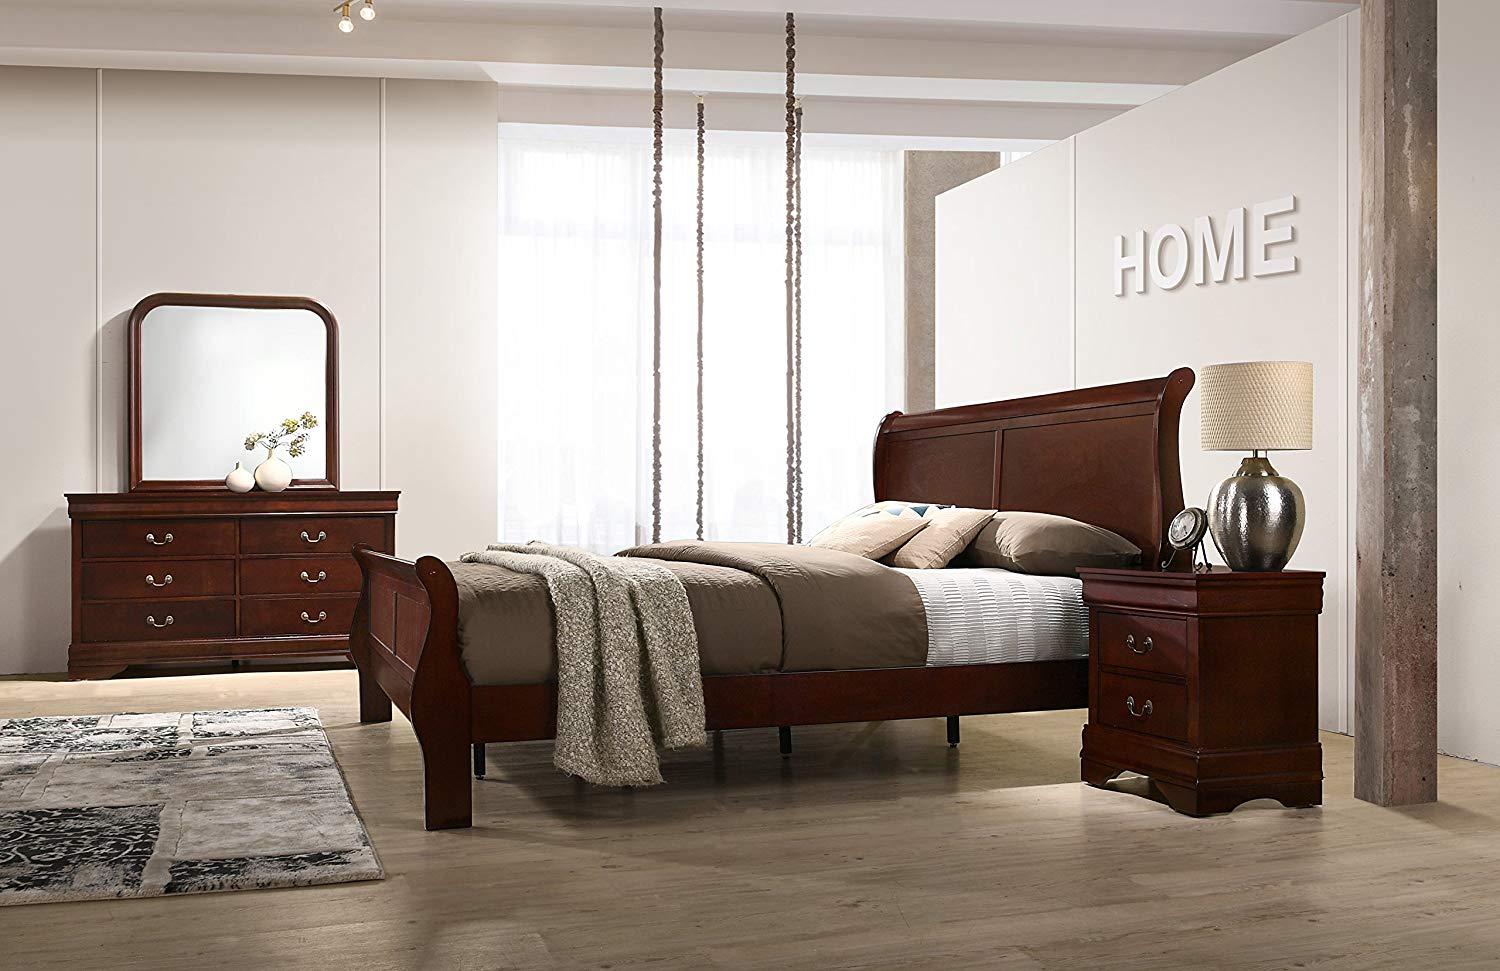 philippe langdon bedroom furniture